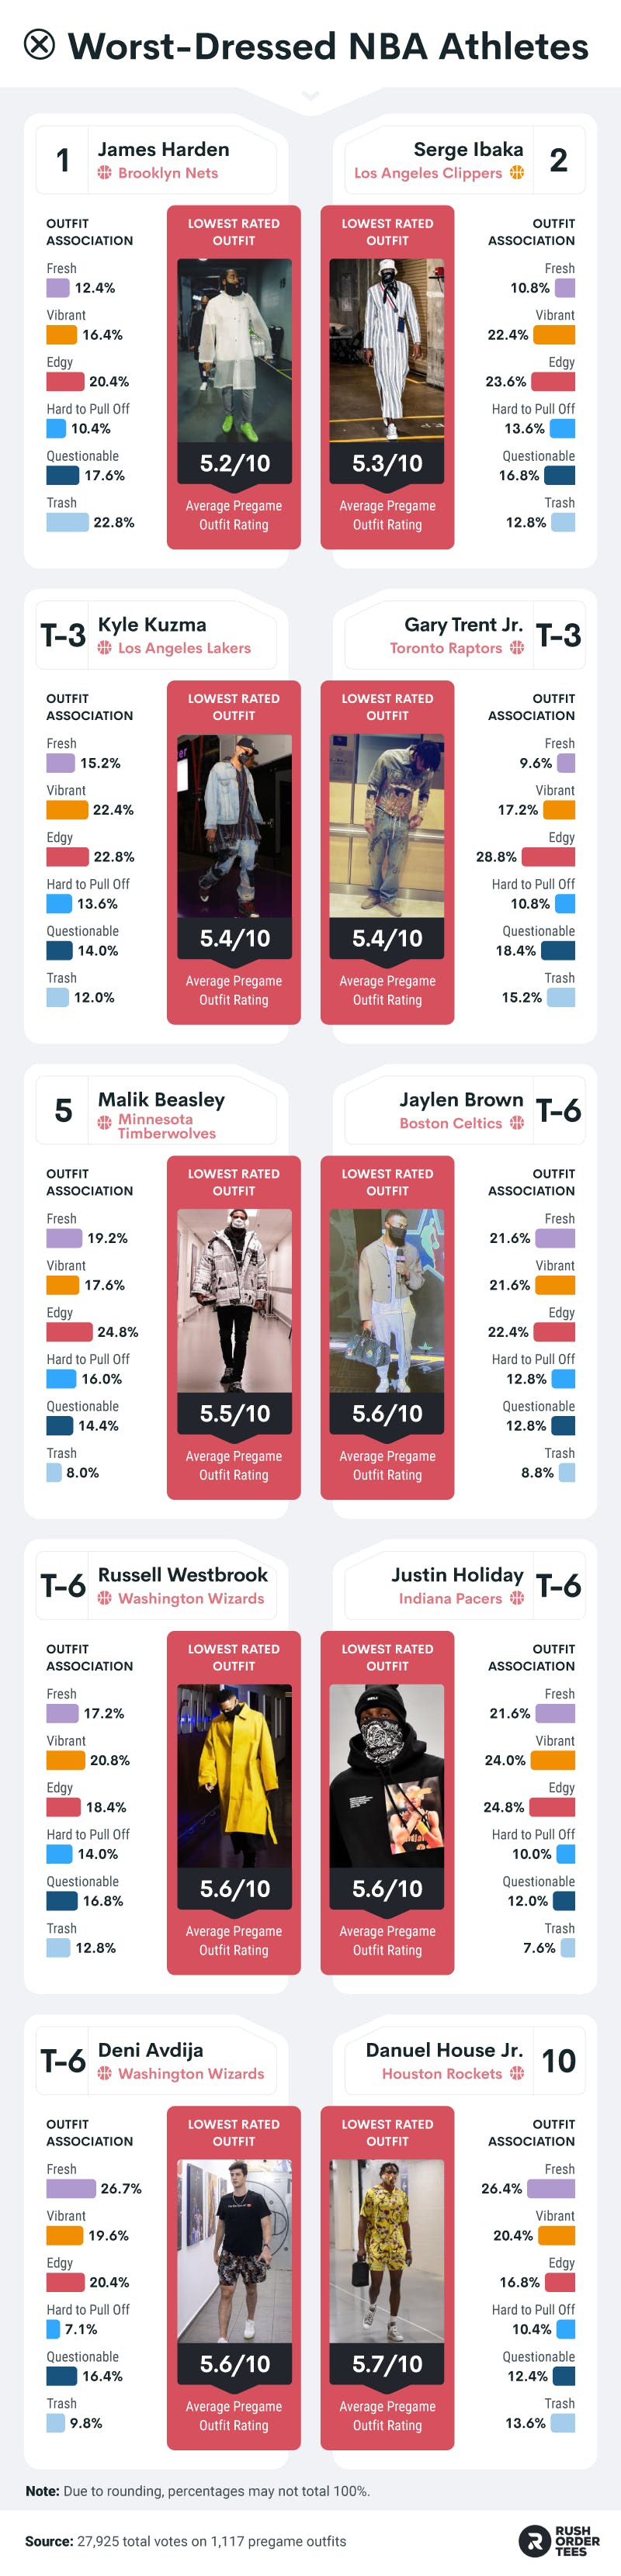 Ranking of the worst dressed NBA Athletes